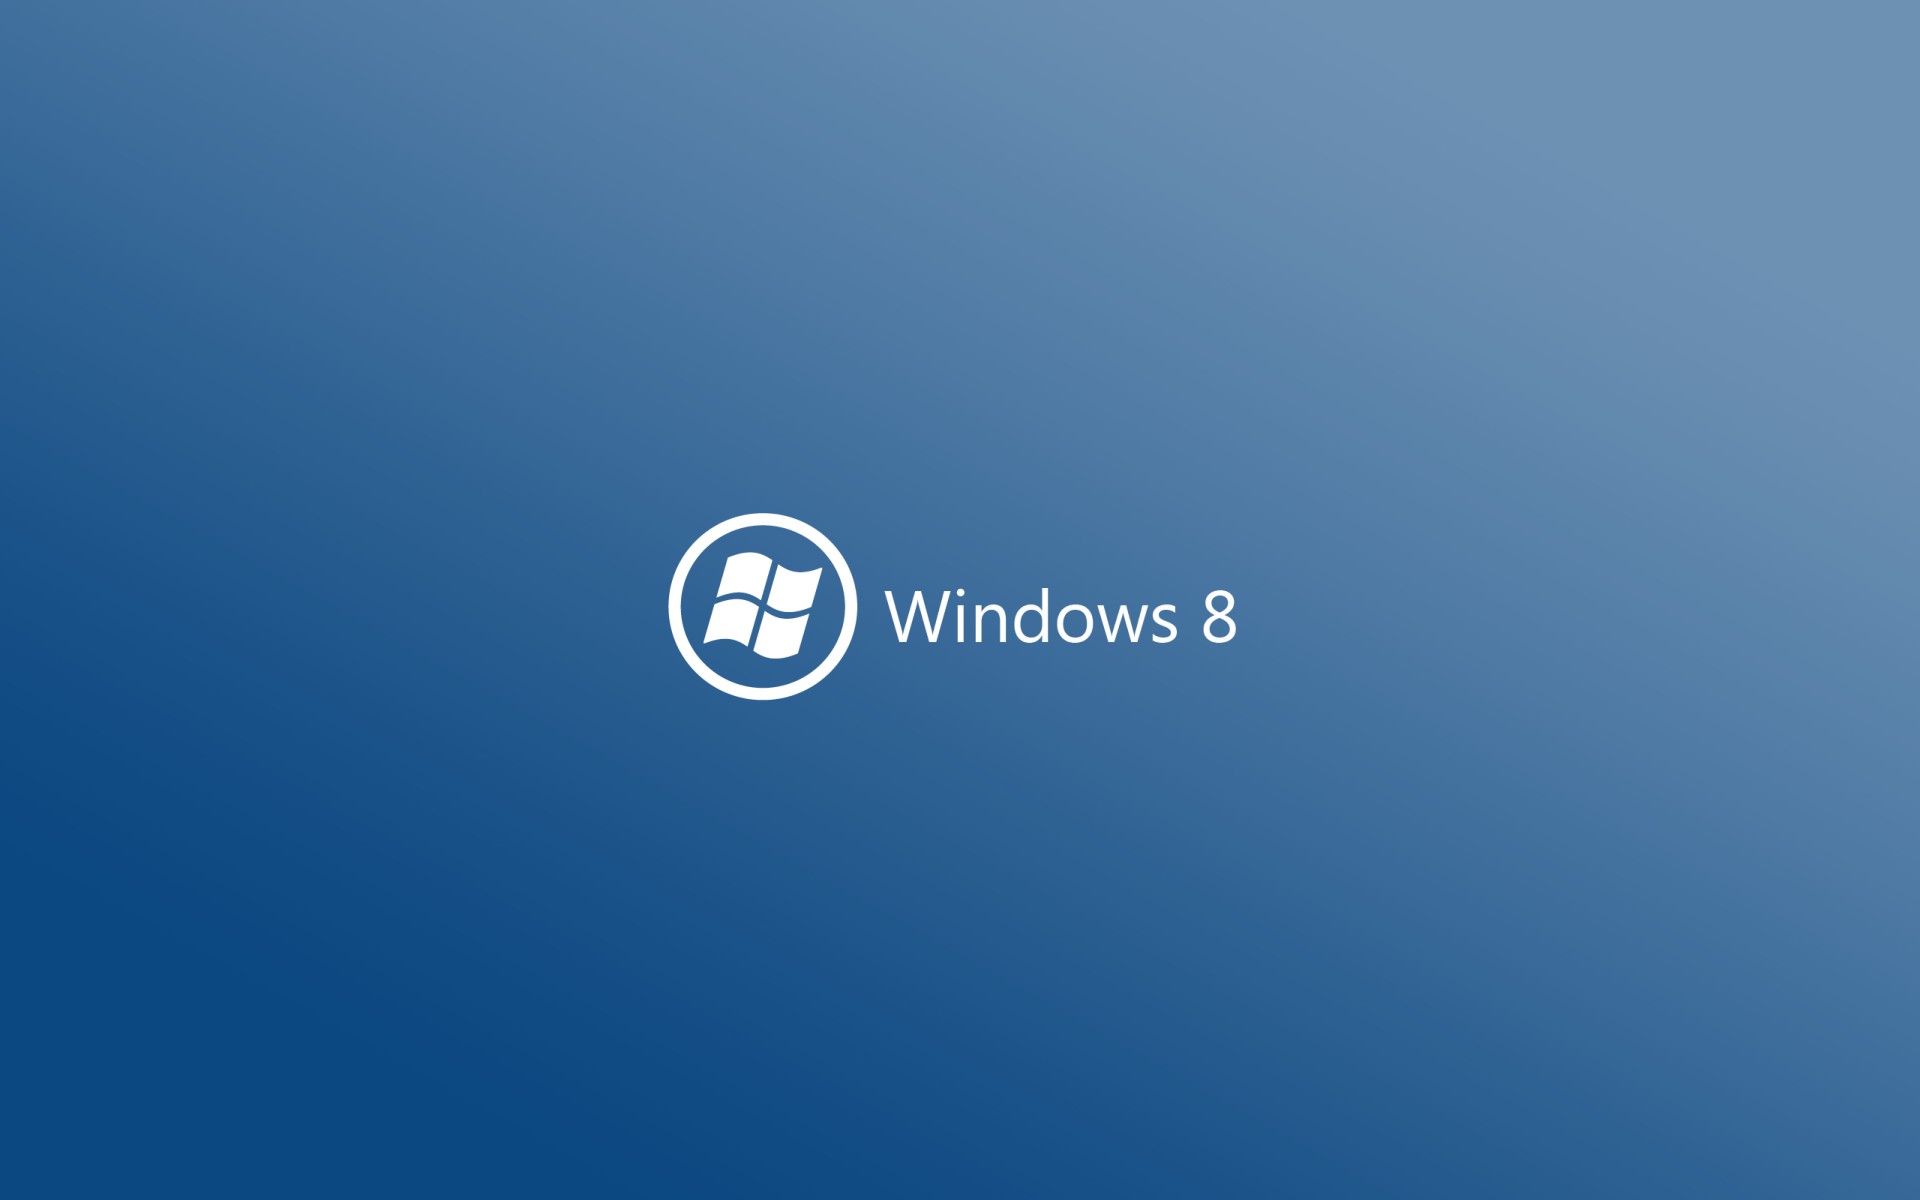 Windows 8 Hd Wallpapers ~ Toptenpack.com